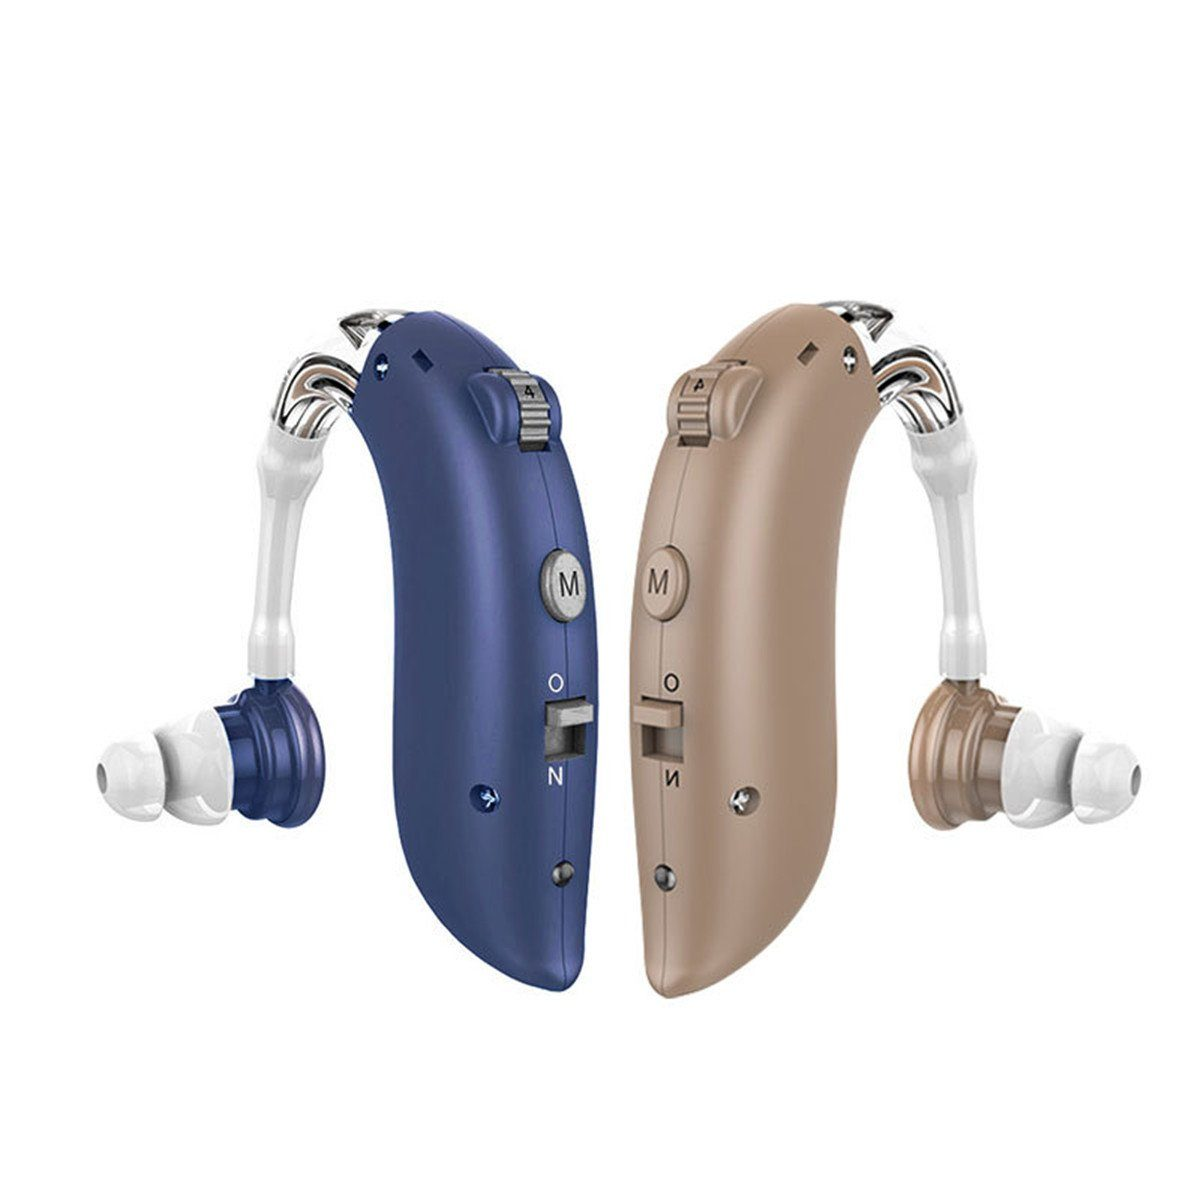 SYNTEK Hörgerät,Hörverstärker-Smart Hörverstärker mit Geräuschreduzierung automatischer und Anpassung Hörgerät